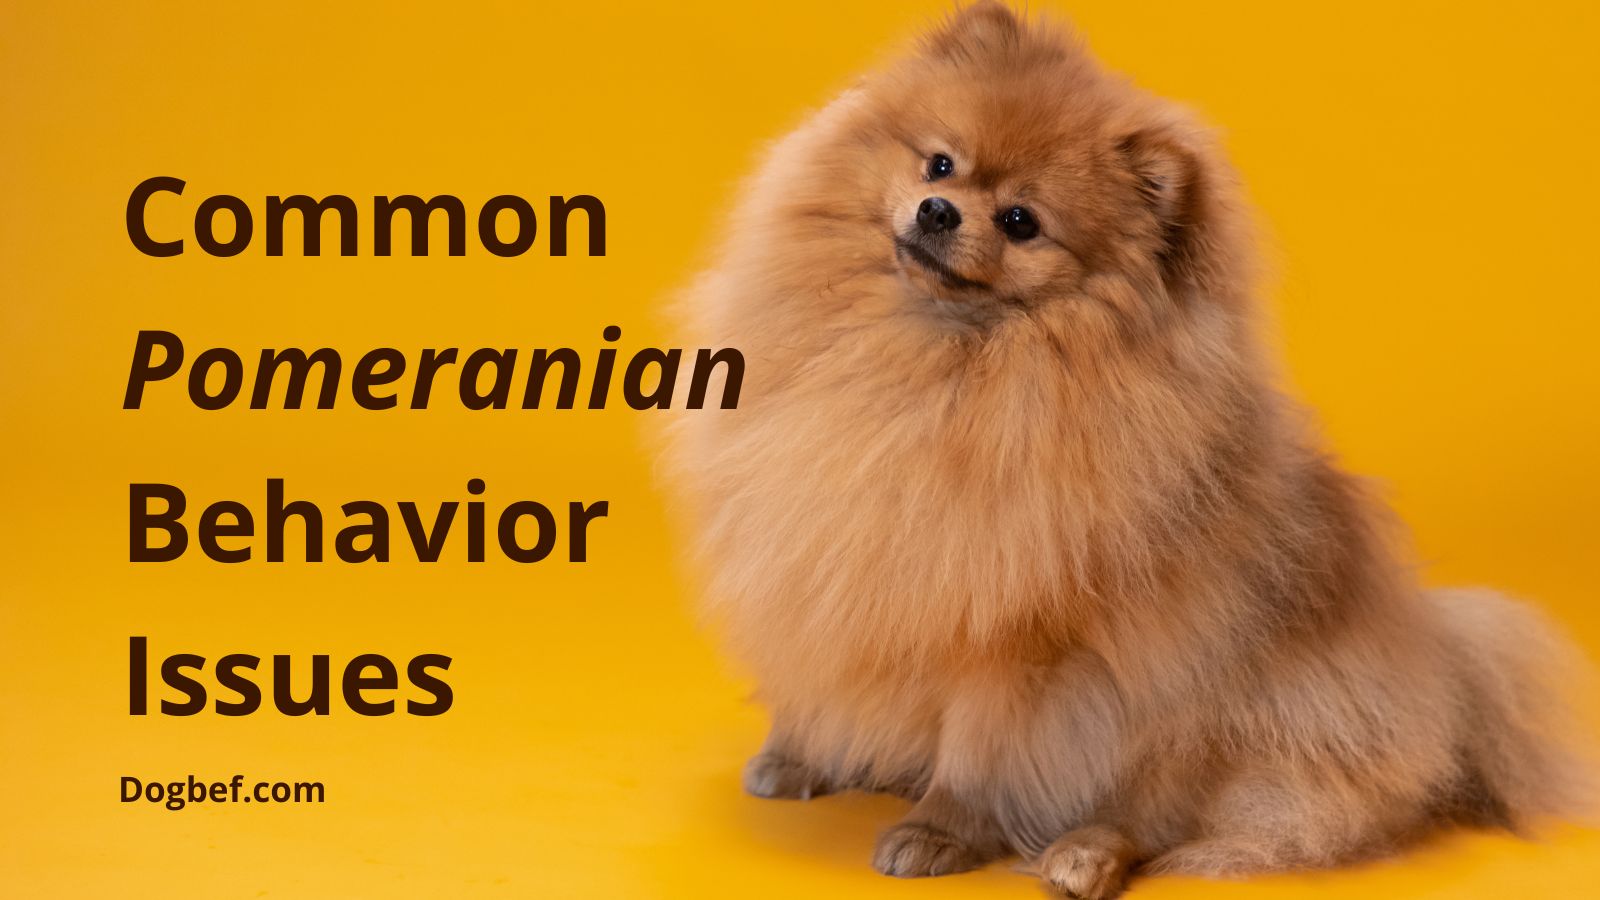 Pomeranian Behavior Issues